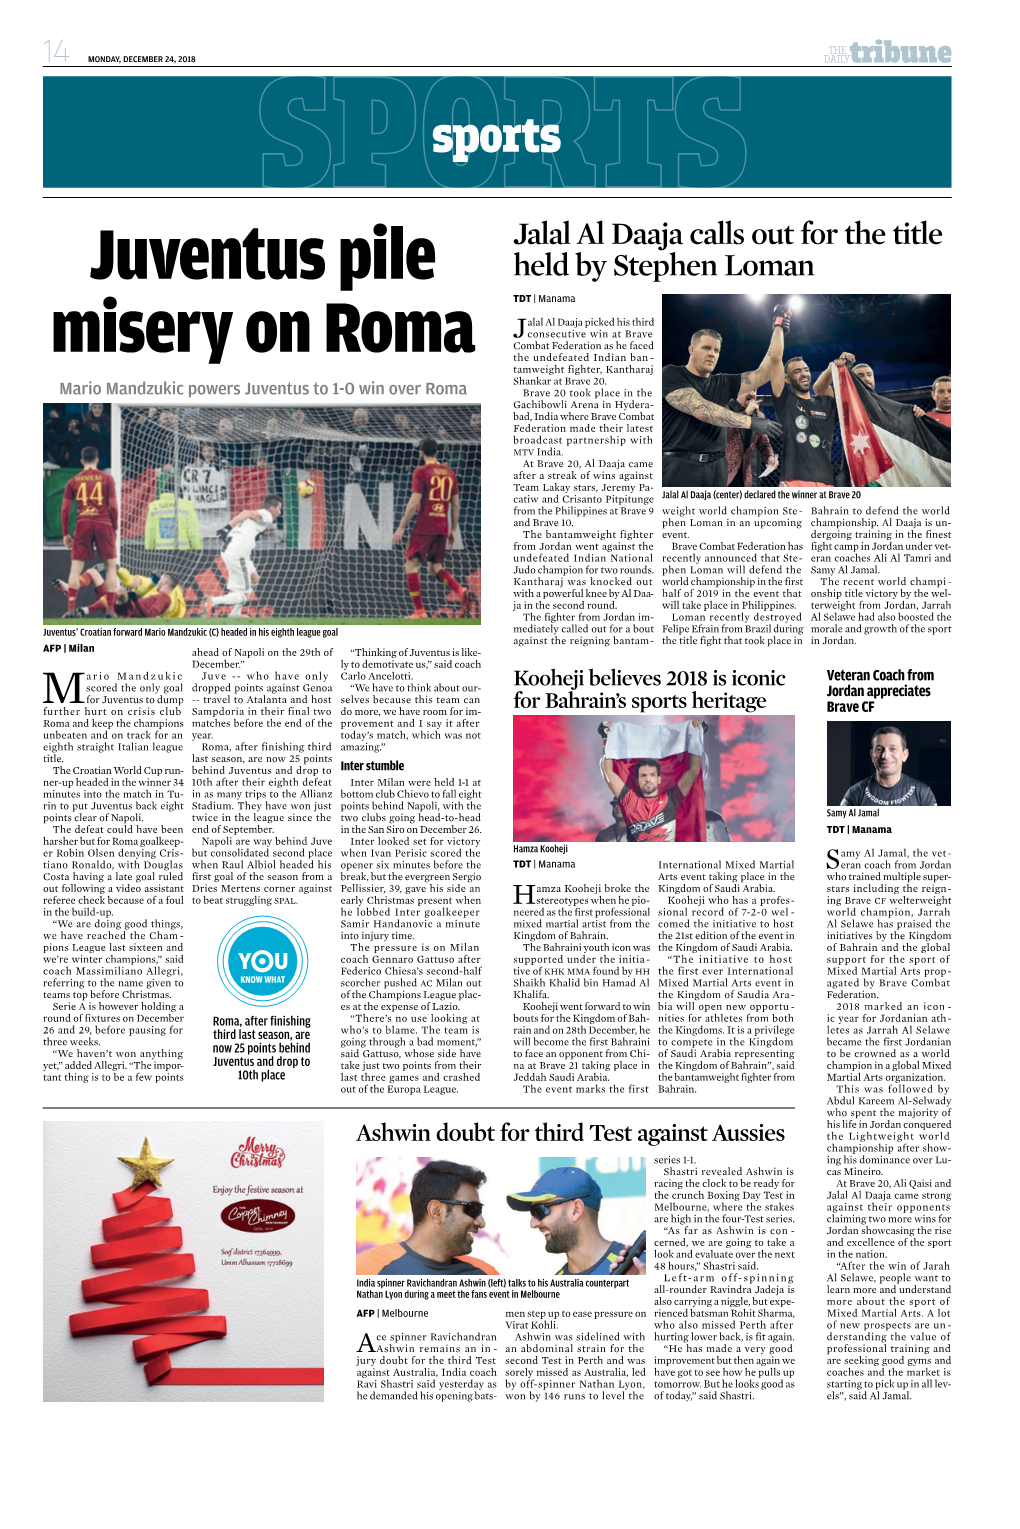 Juventus Pile Misery on Roma